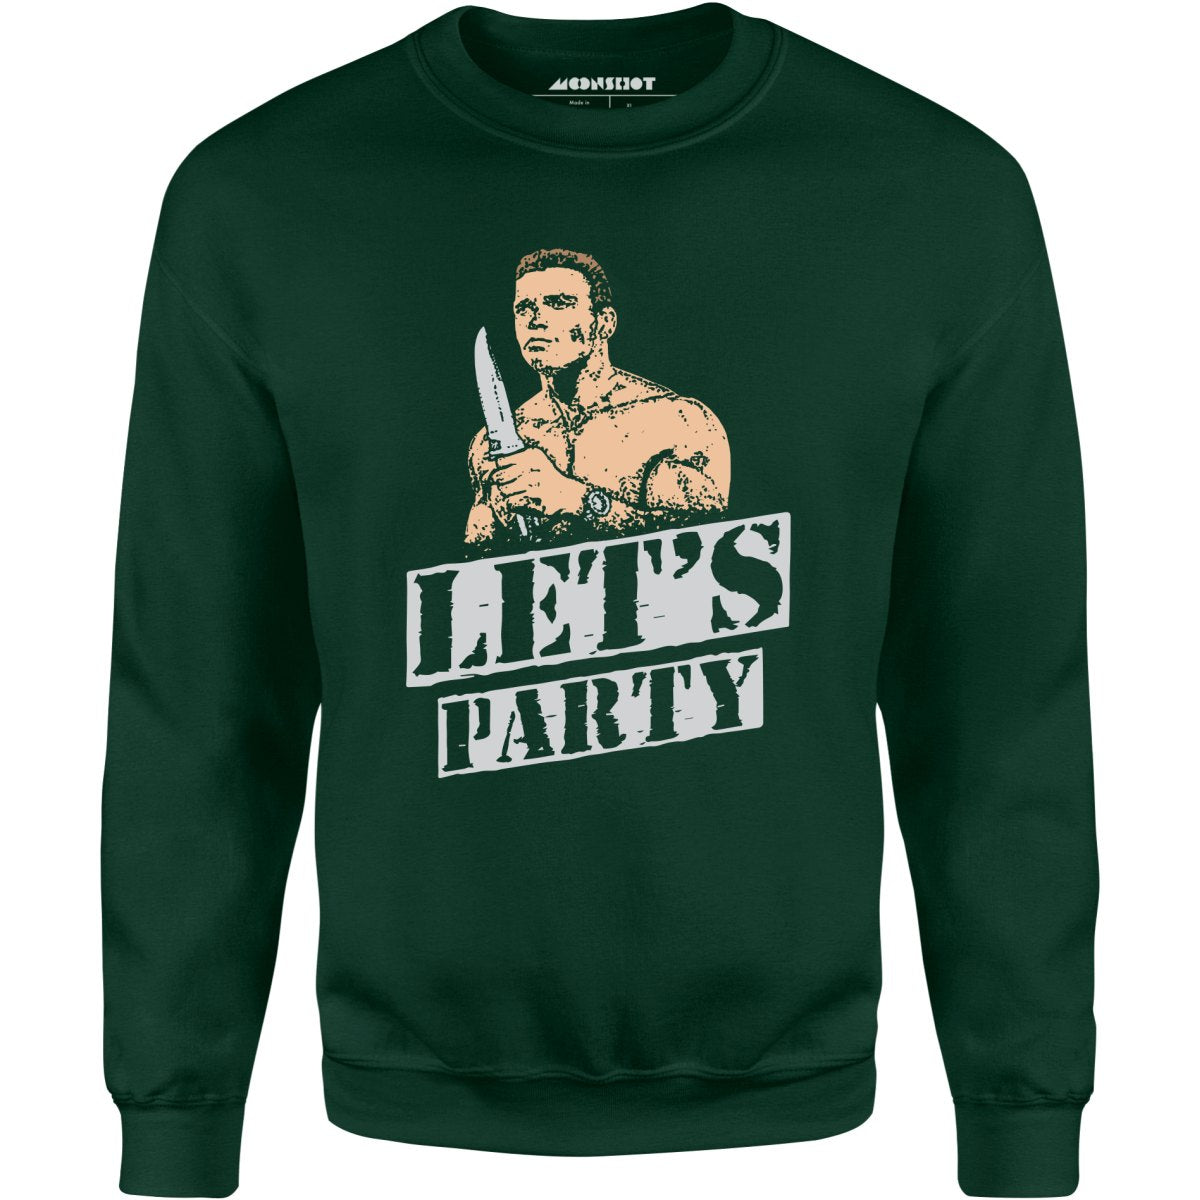 Let's Party - Commando - Unisex Sweatshirt